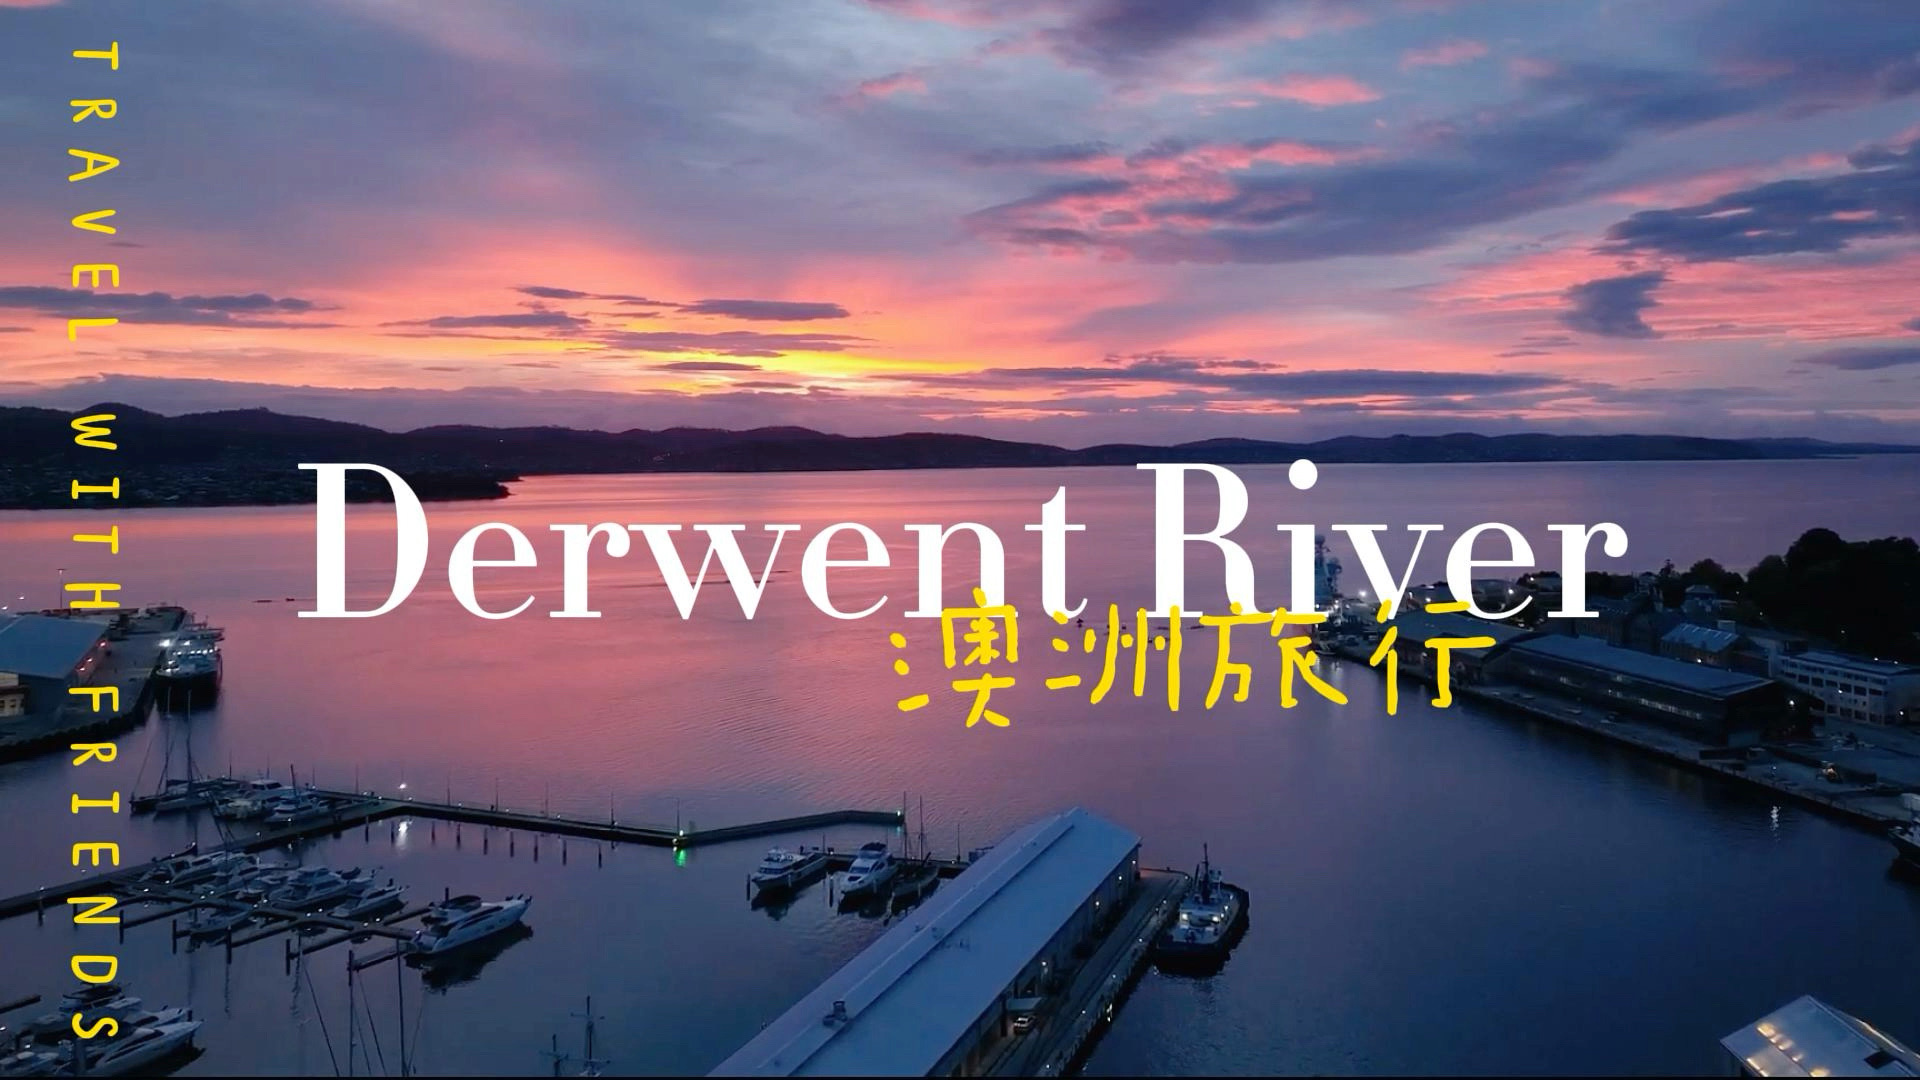 寂静之声｜Derwent River